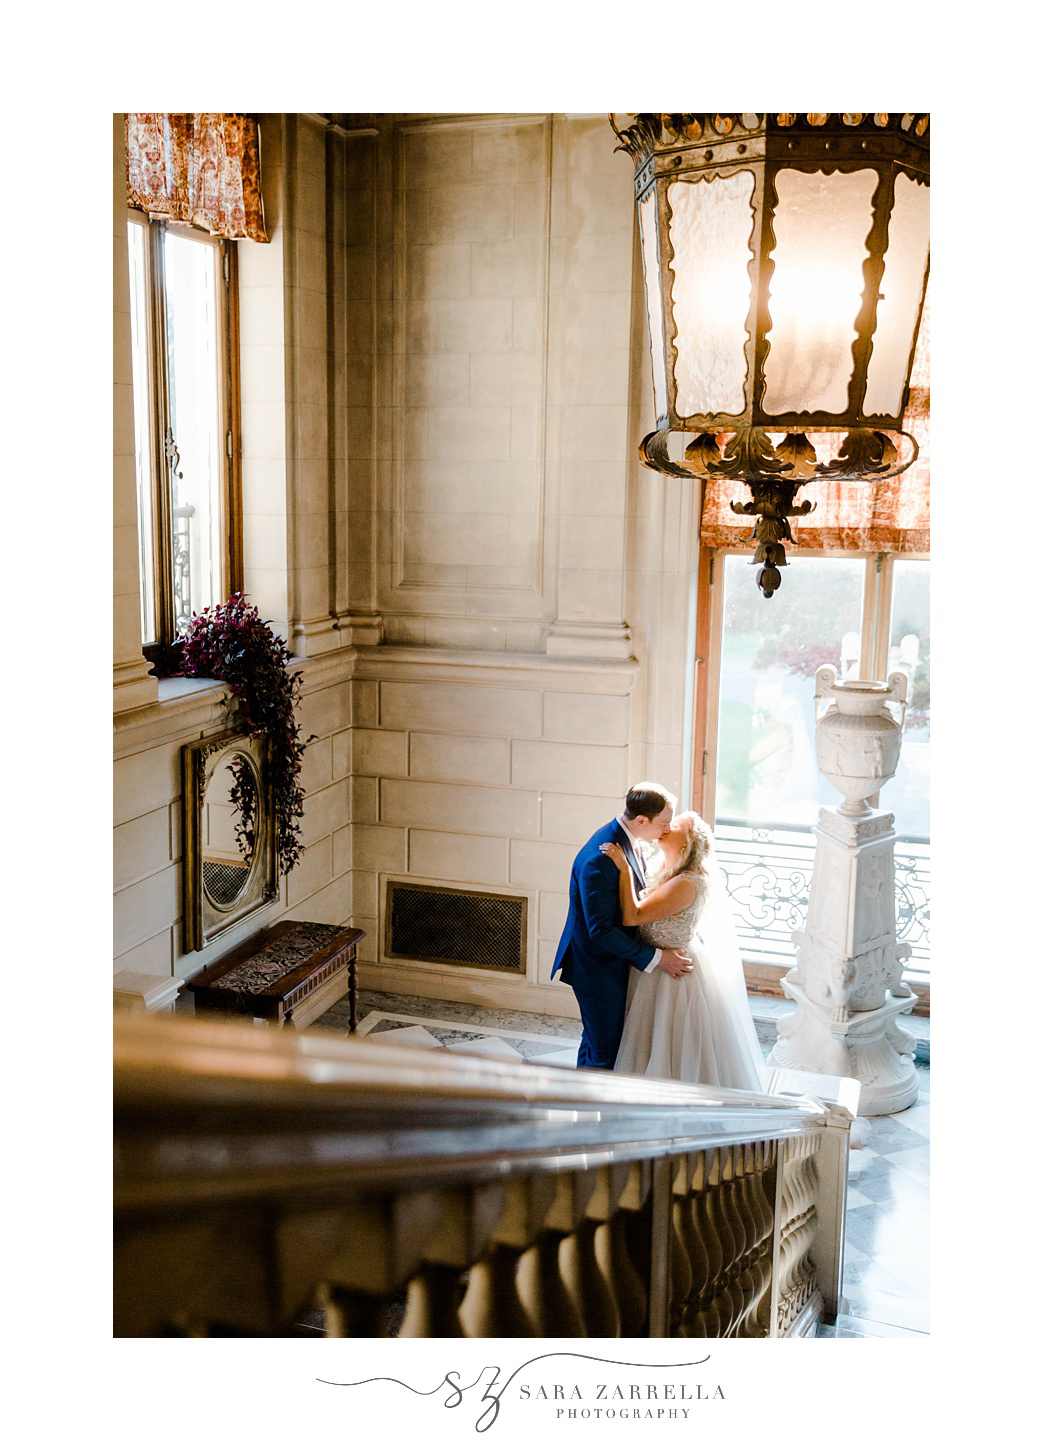 newlyweds kiss at base of staircase in Warwick RI mansion